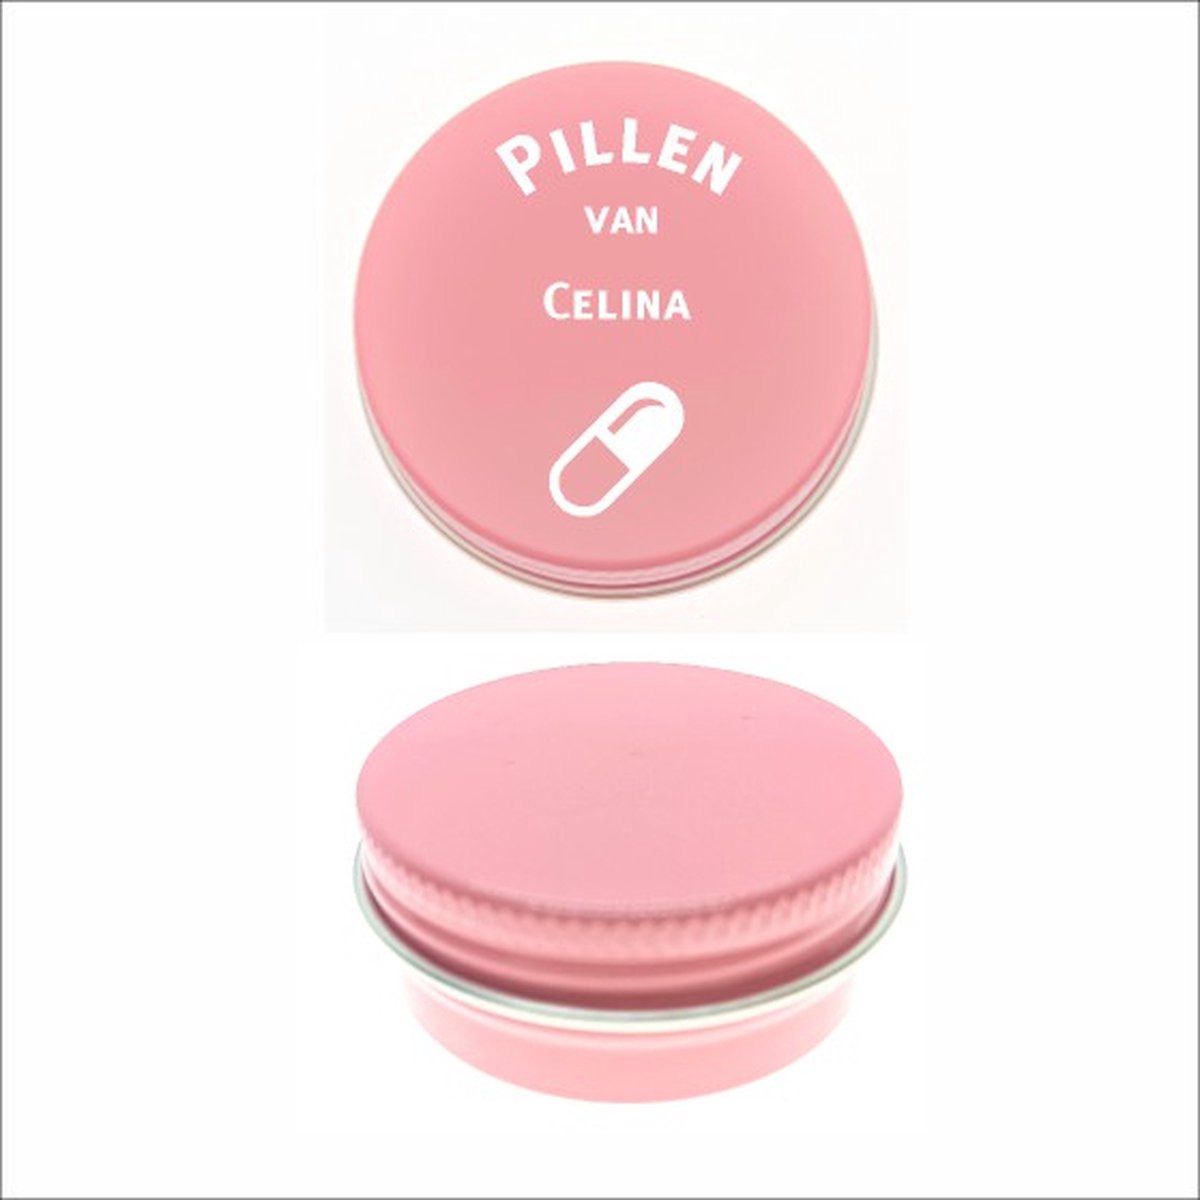 Pillen Blikje Met Naam Gravering - Celina